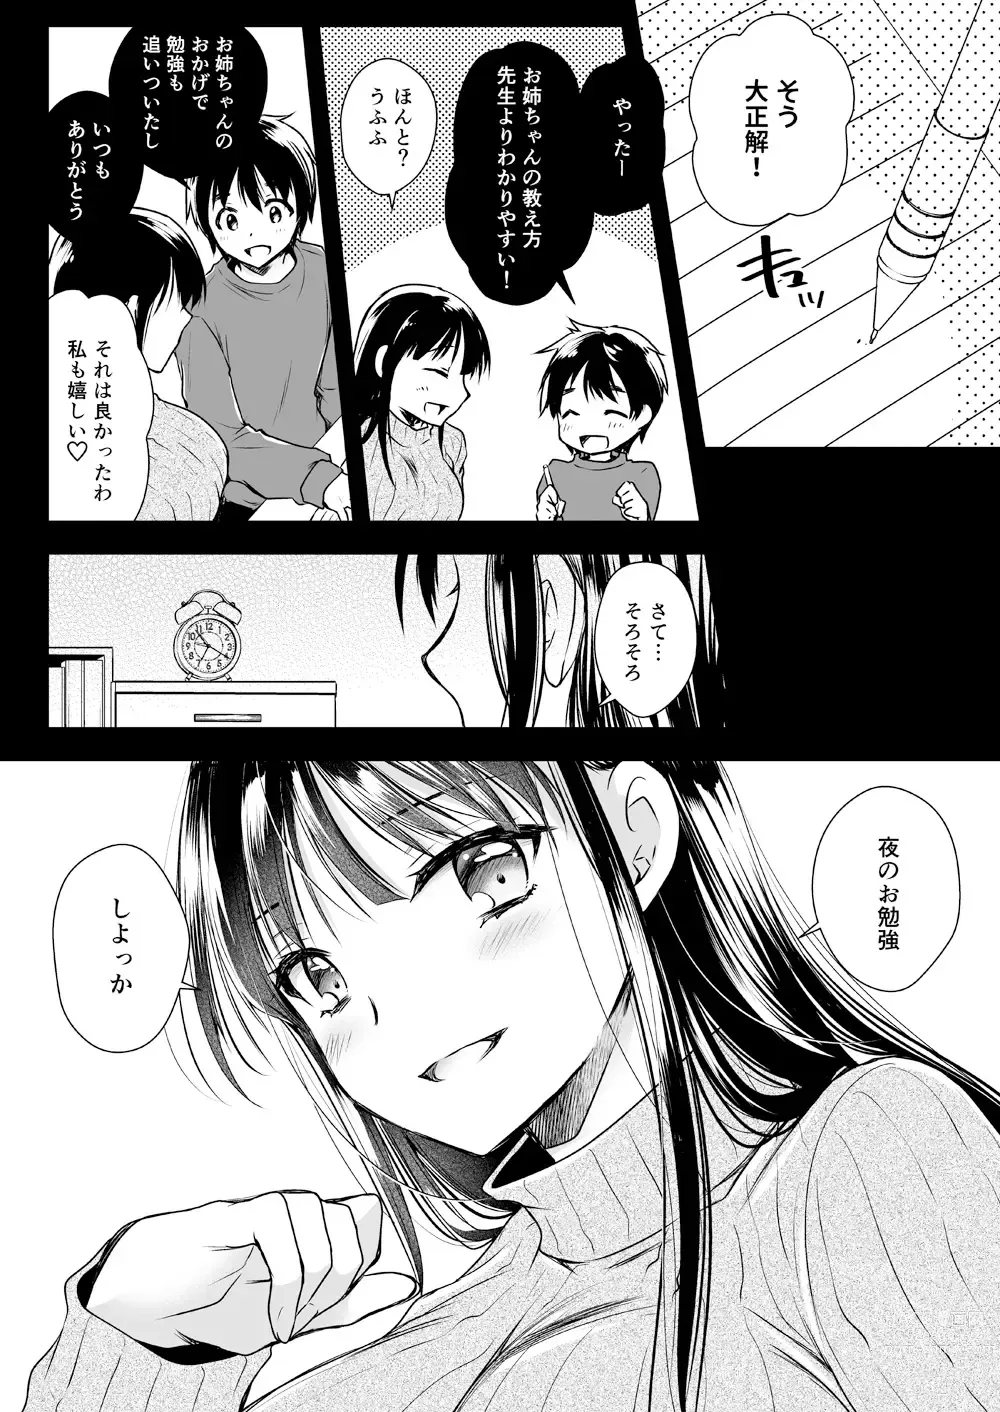 Page 5 of manga Kyou izon Kyoudai